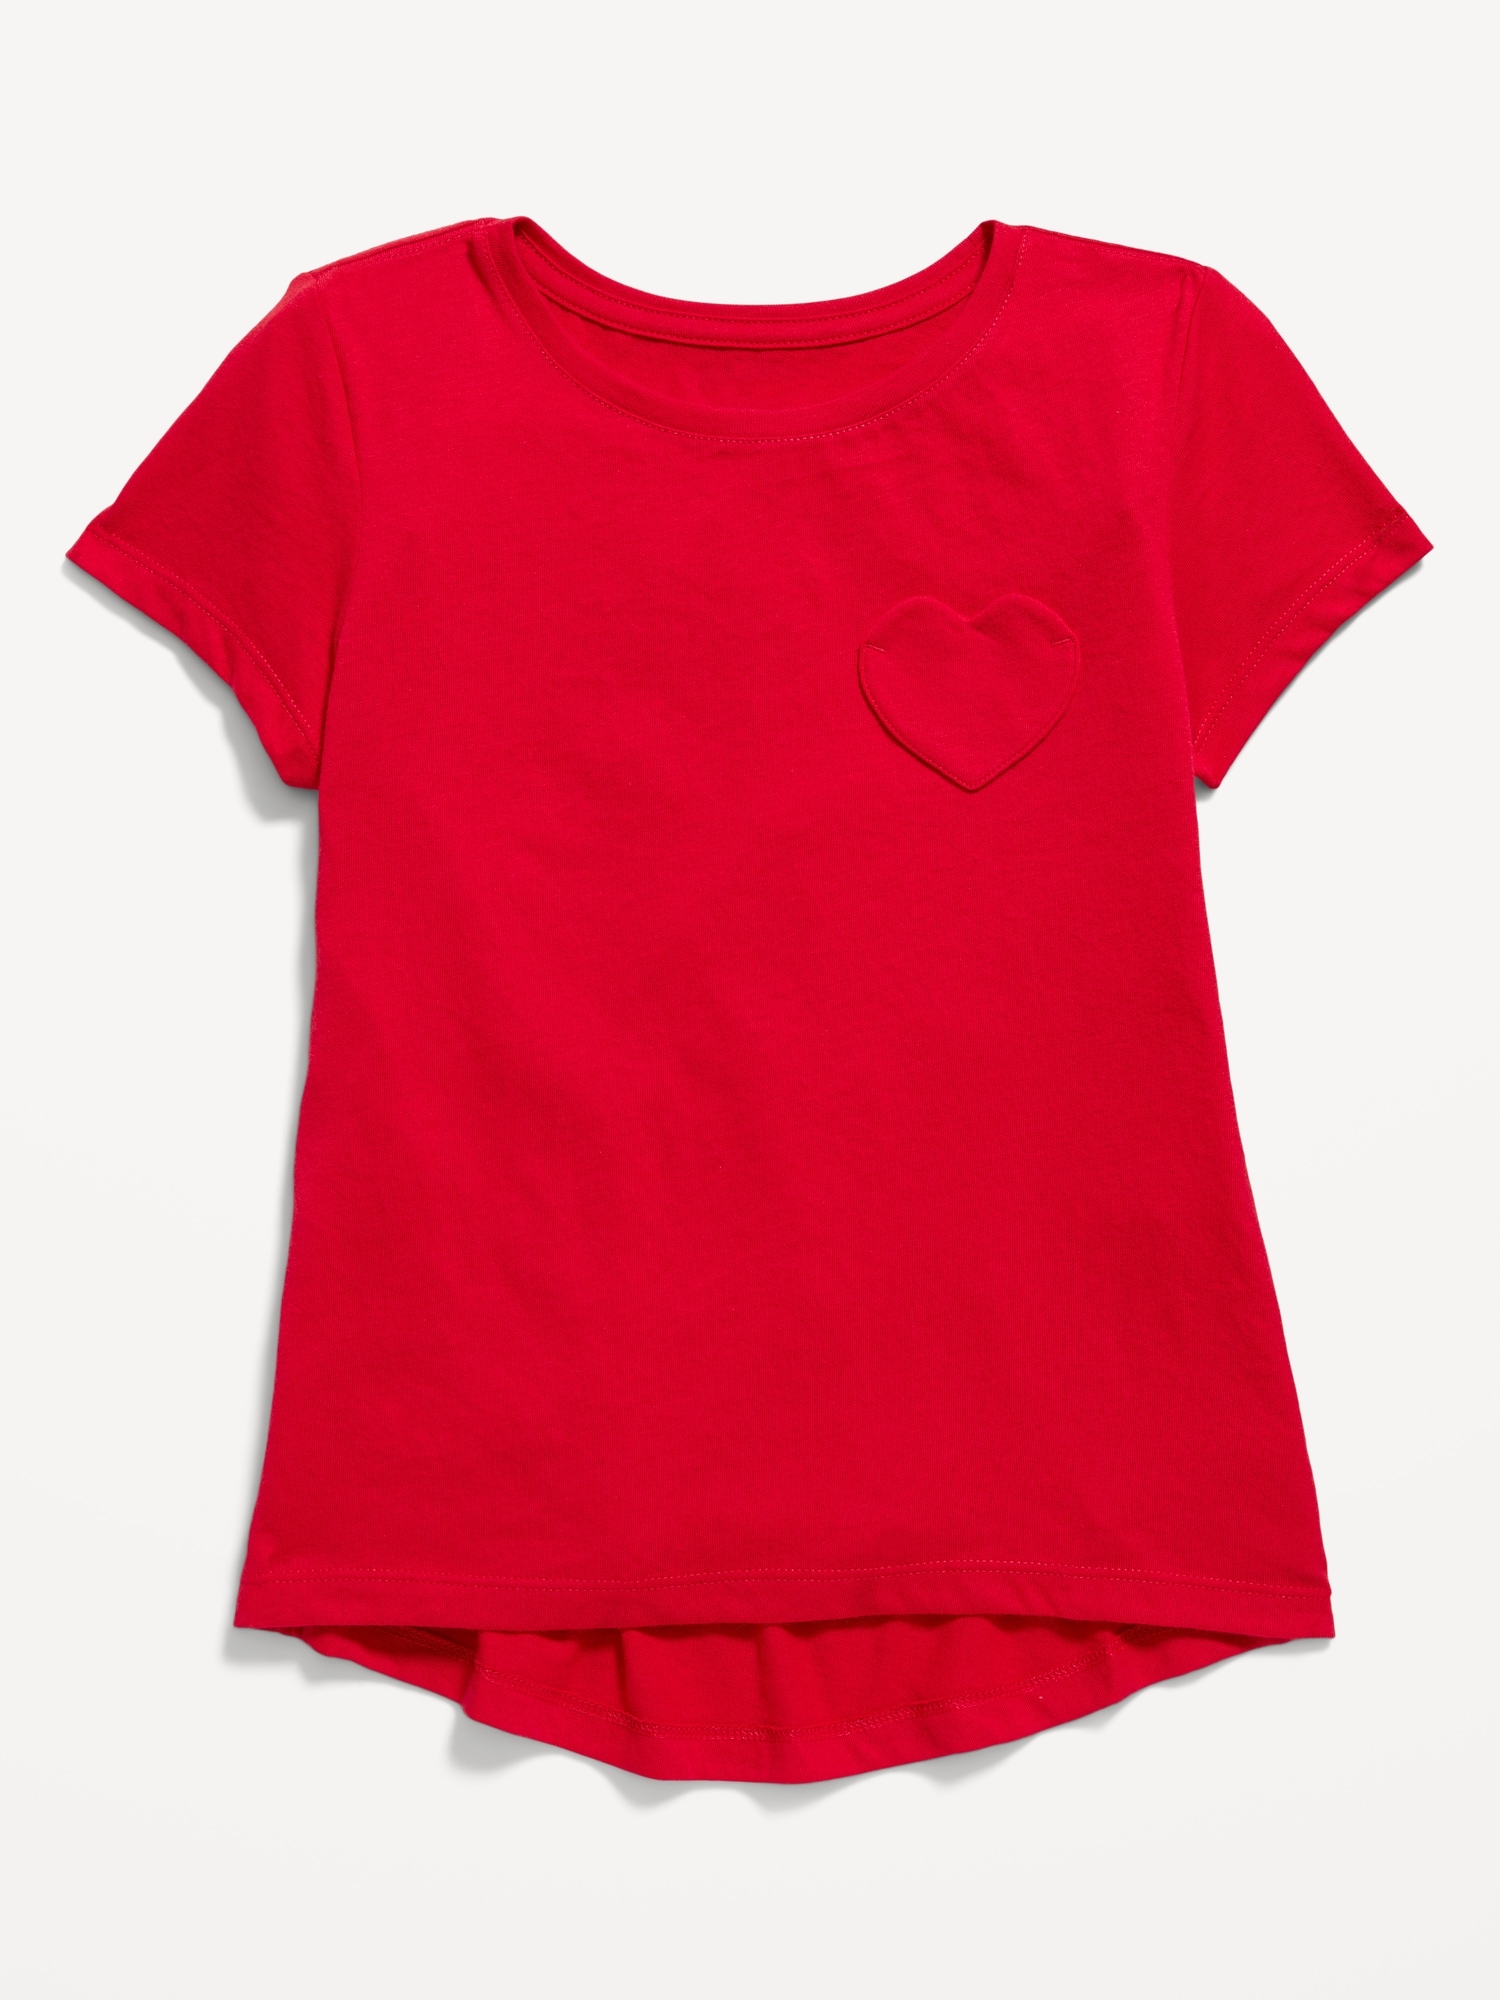 Old Navy Softest Short-Sleeve Heart-Pocket T-Shirt for Girls red. 1